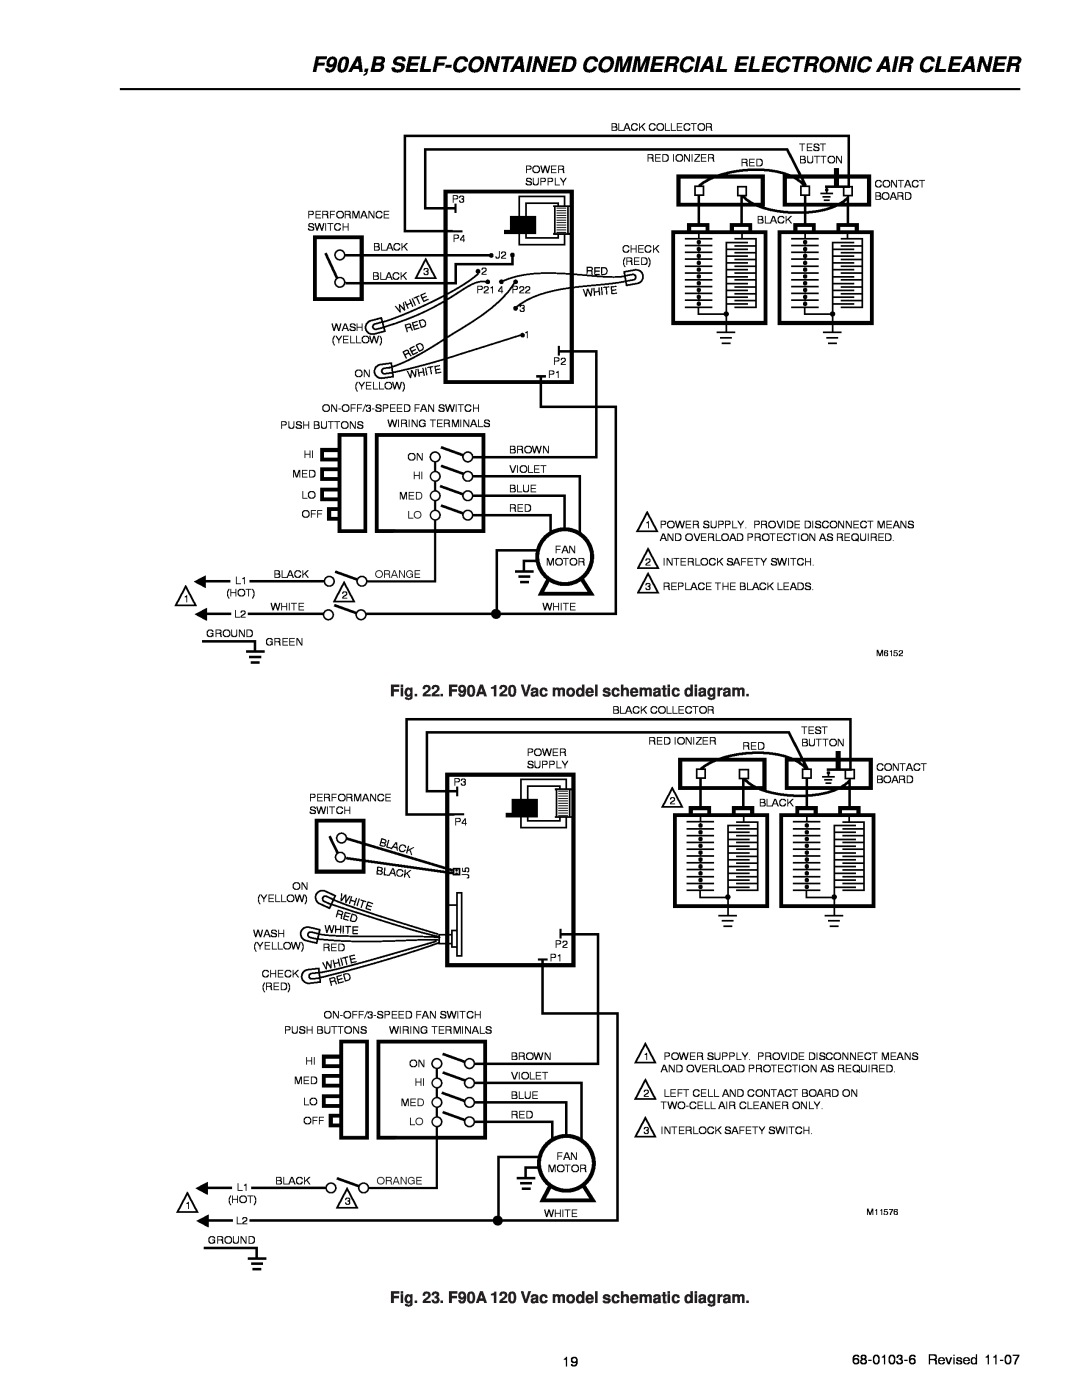 Honeywell F90B specifications F90A 120 Vac model schematic diagram, Black, White 